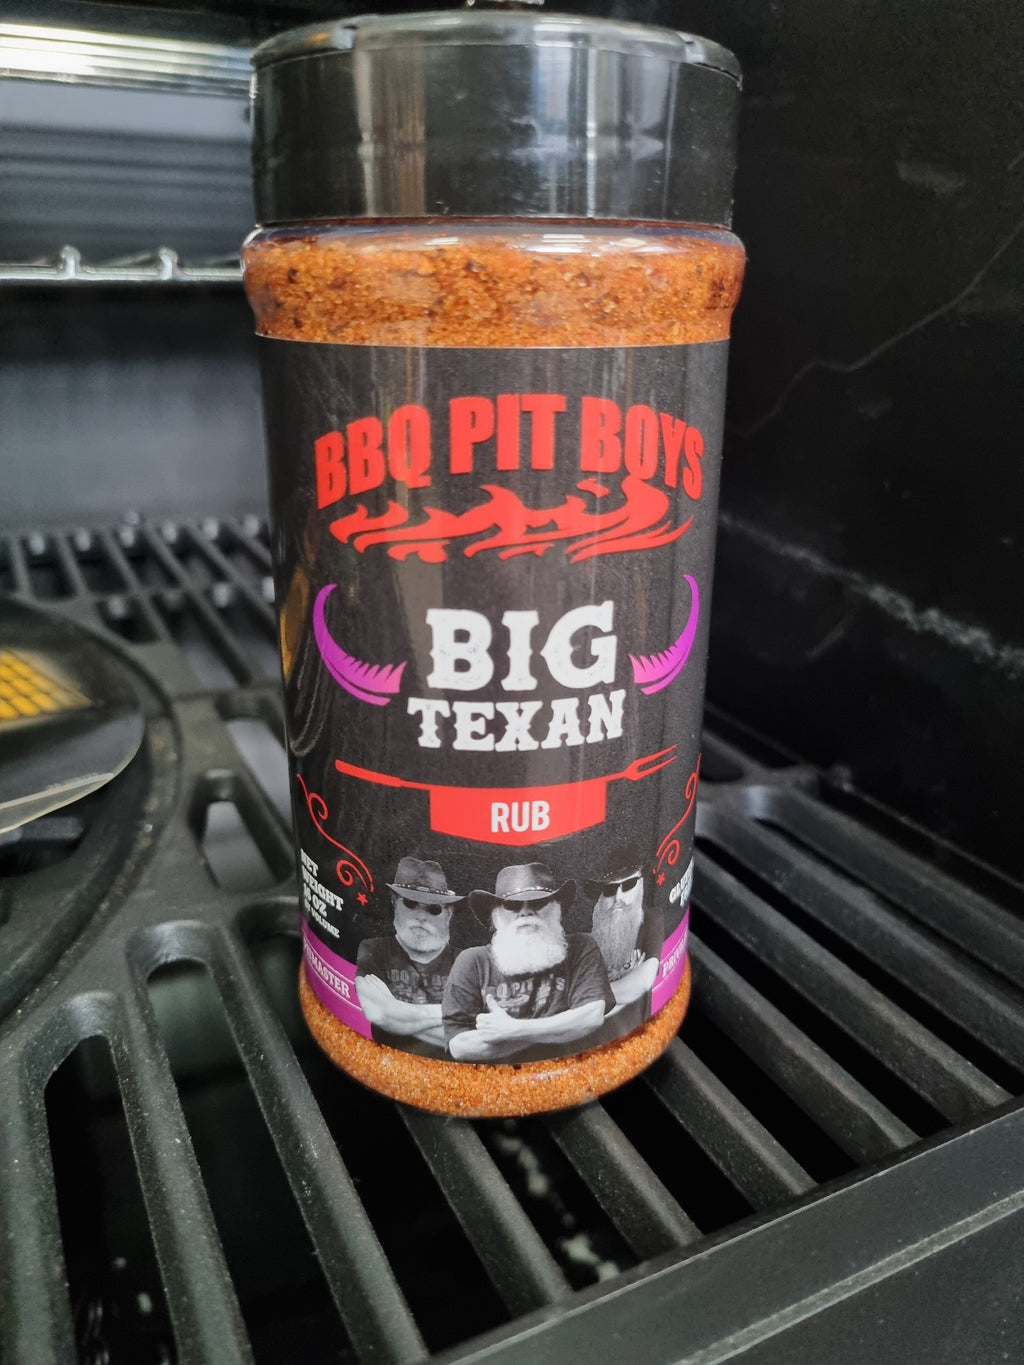 Big Texan by BBQ Pit Boys